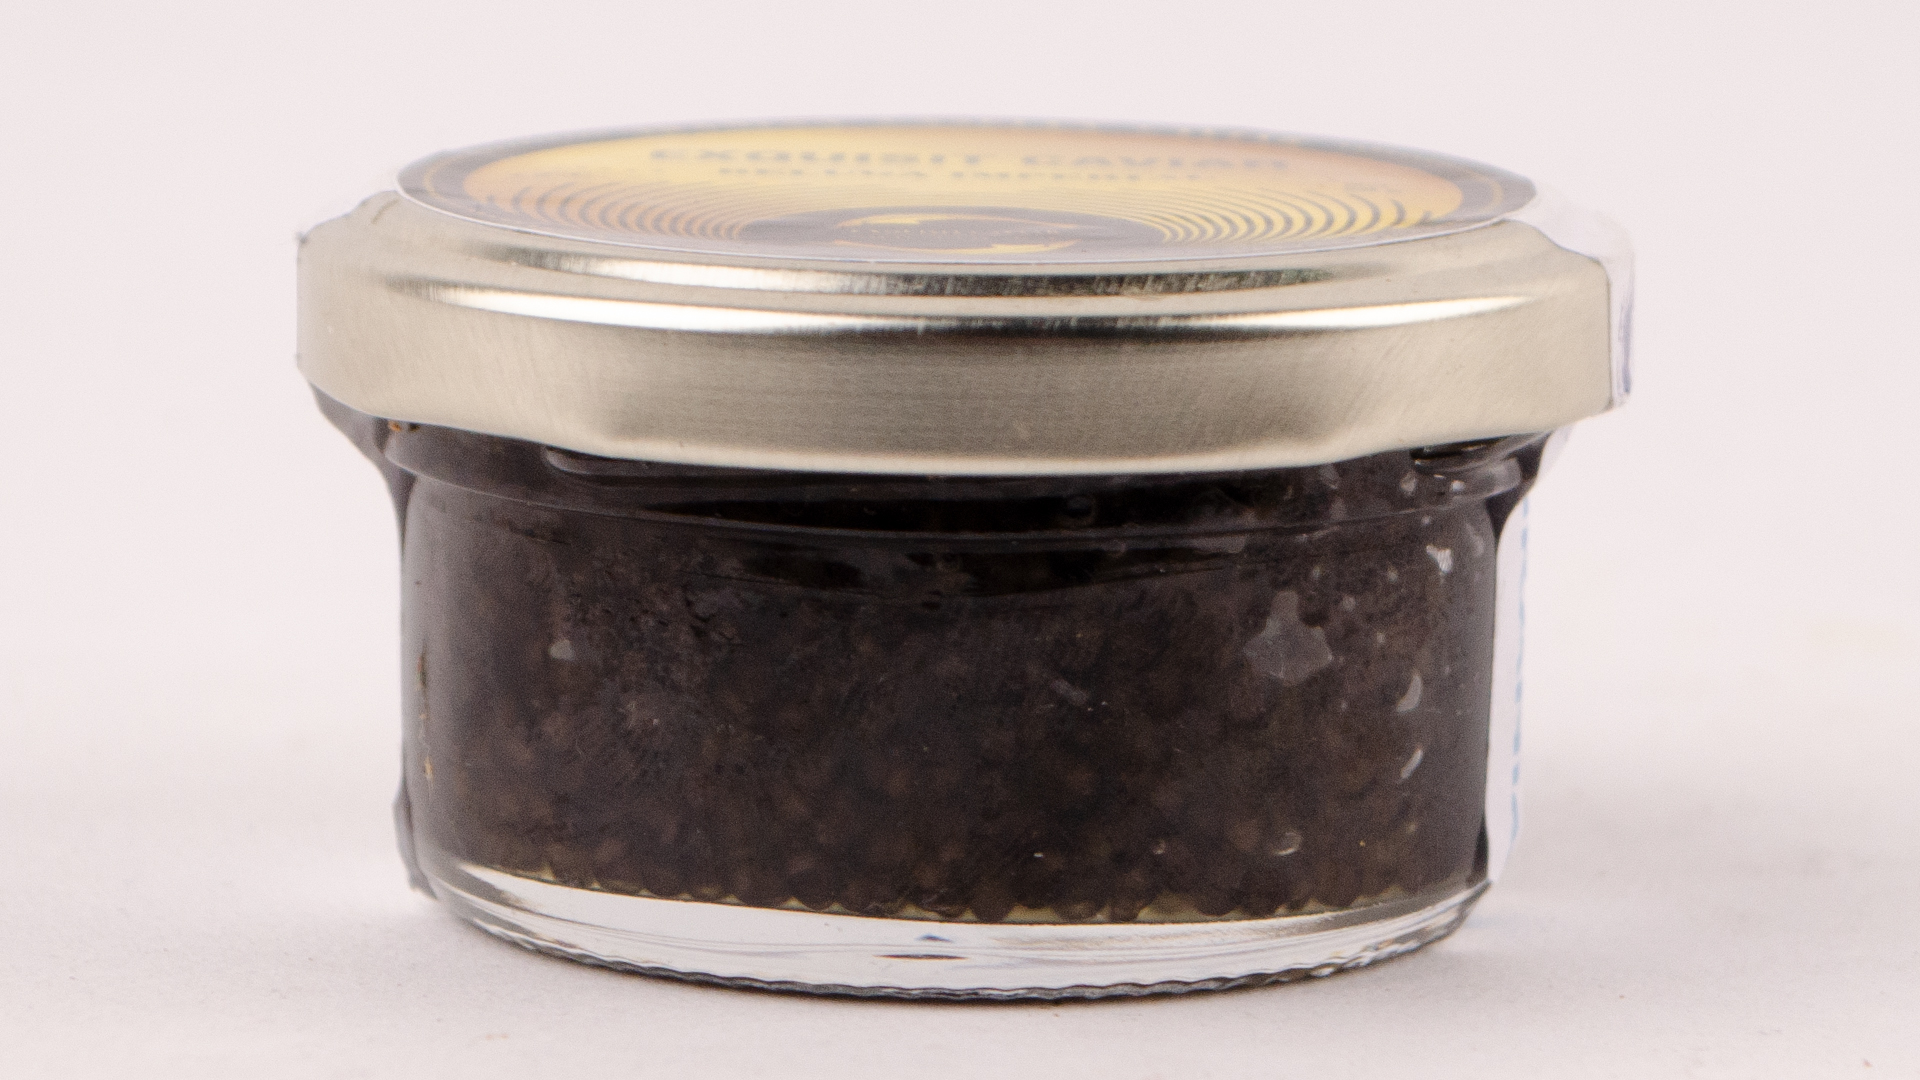 Beluga Kaviar Iran 50 gr